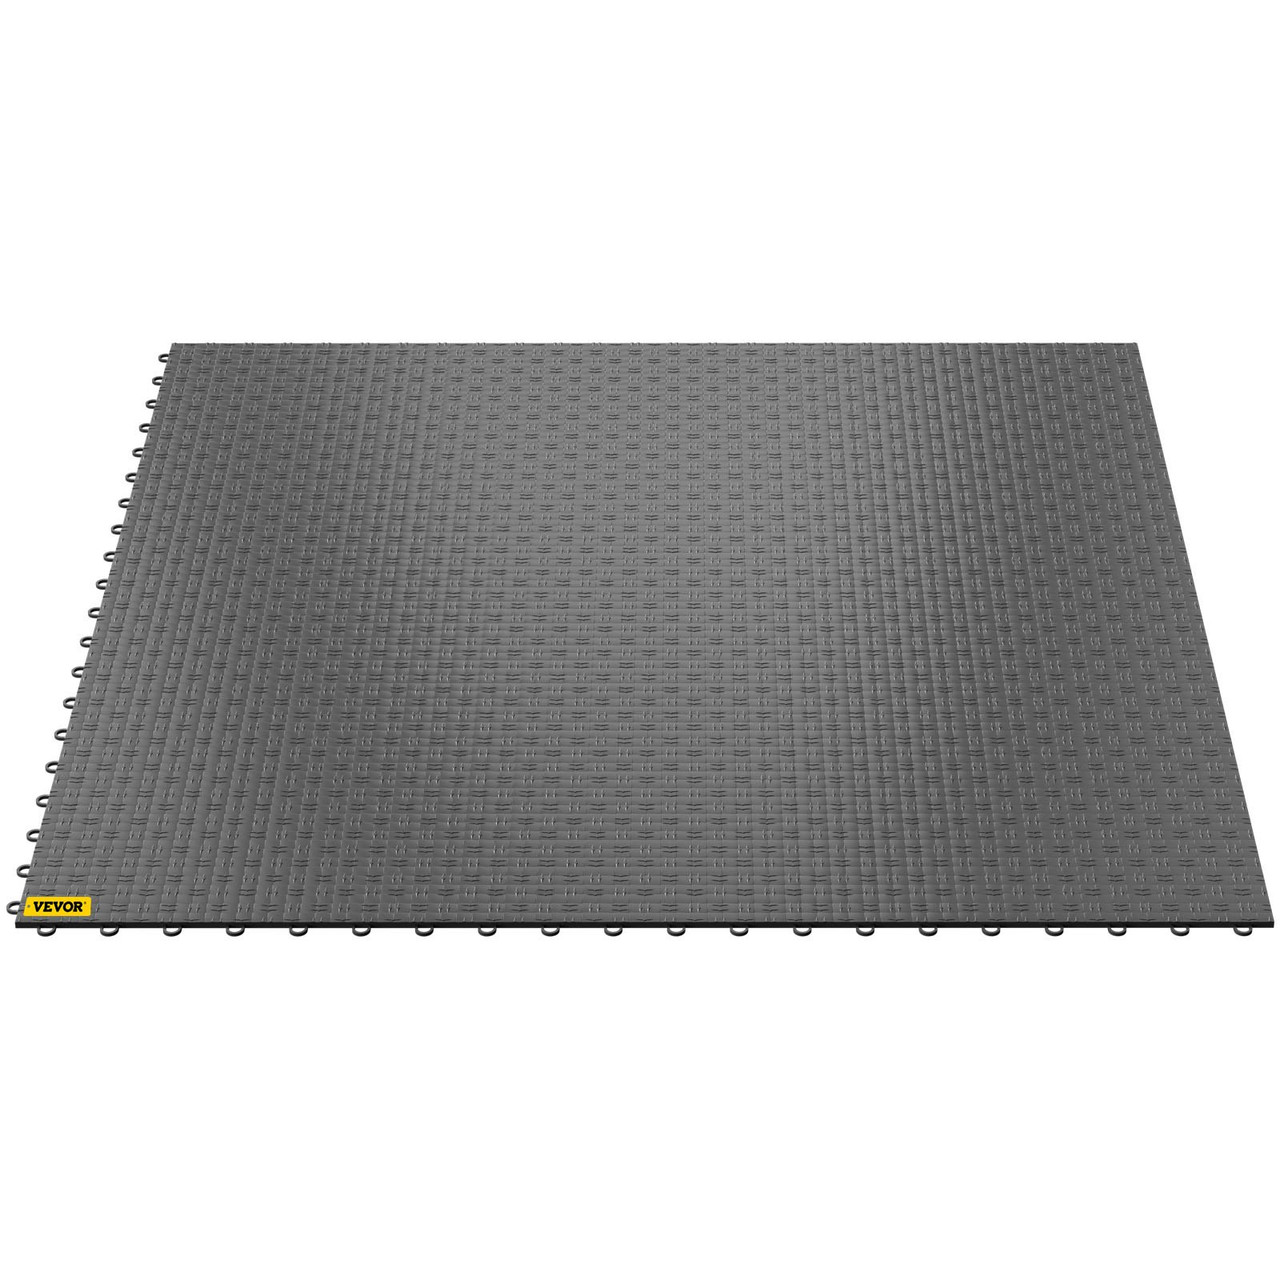 Garage Tiles Interlocking, 12'' x 12'', 25 pcs, Graphite Grey Garage Floor Covering Tiles, Non-Slip Diamond Plate Garage Flooring Tiles, Support up